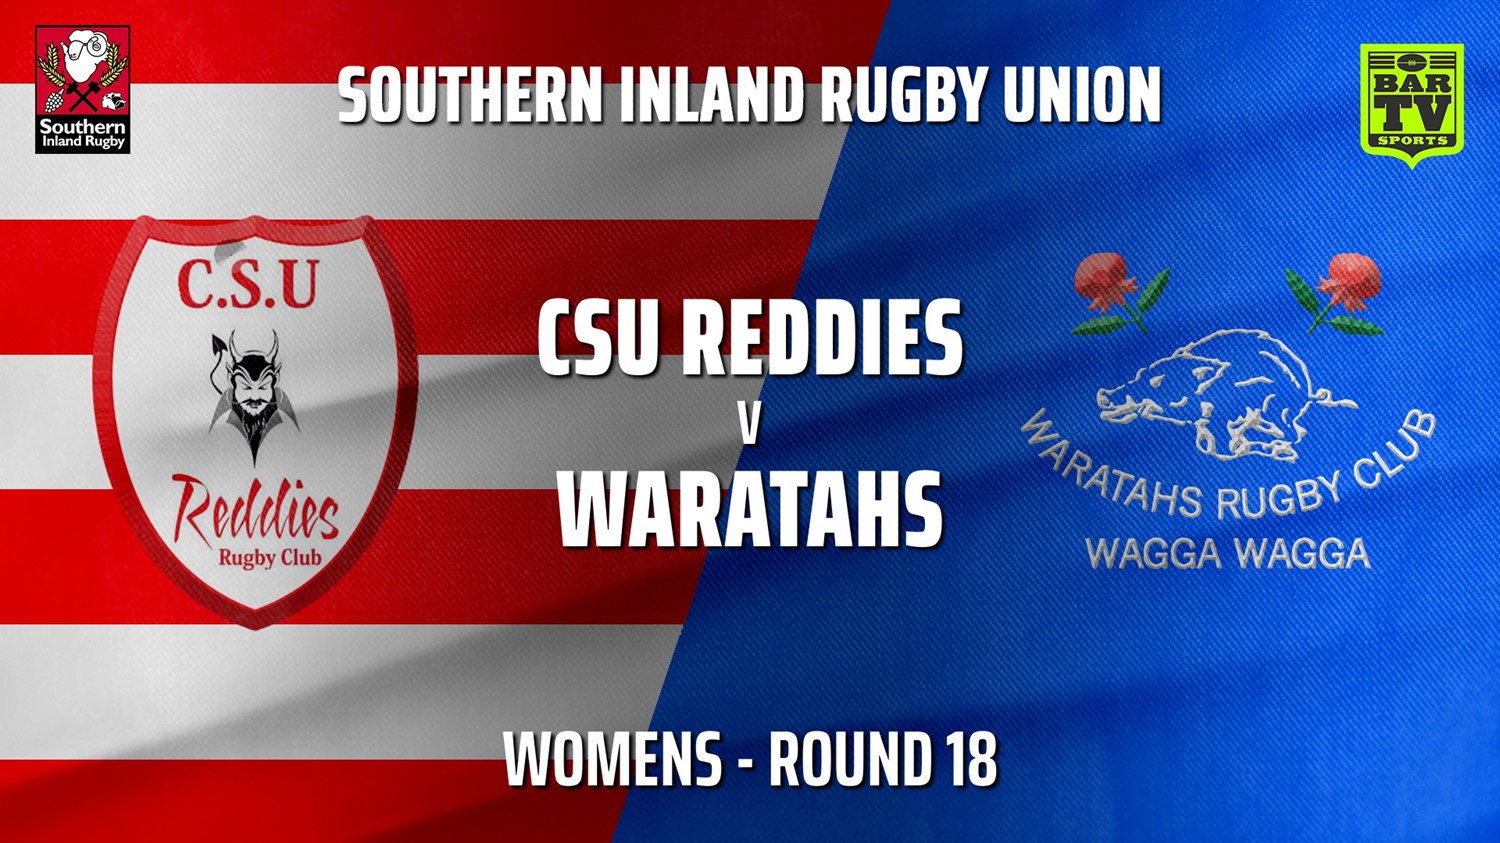 210814-Southern Inland Rugby Union Round 18 - Womens - CSU Reddies v Wagga Waratahs Minigame Slate Image